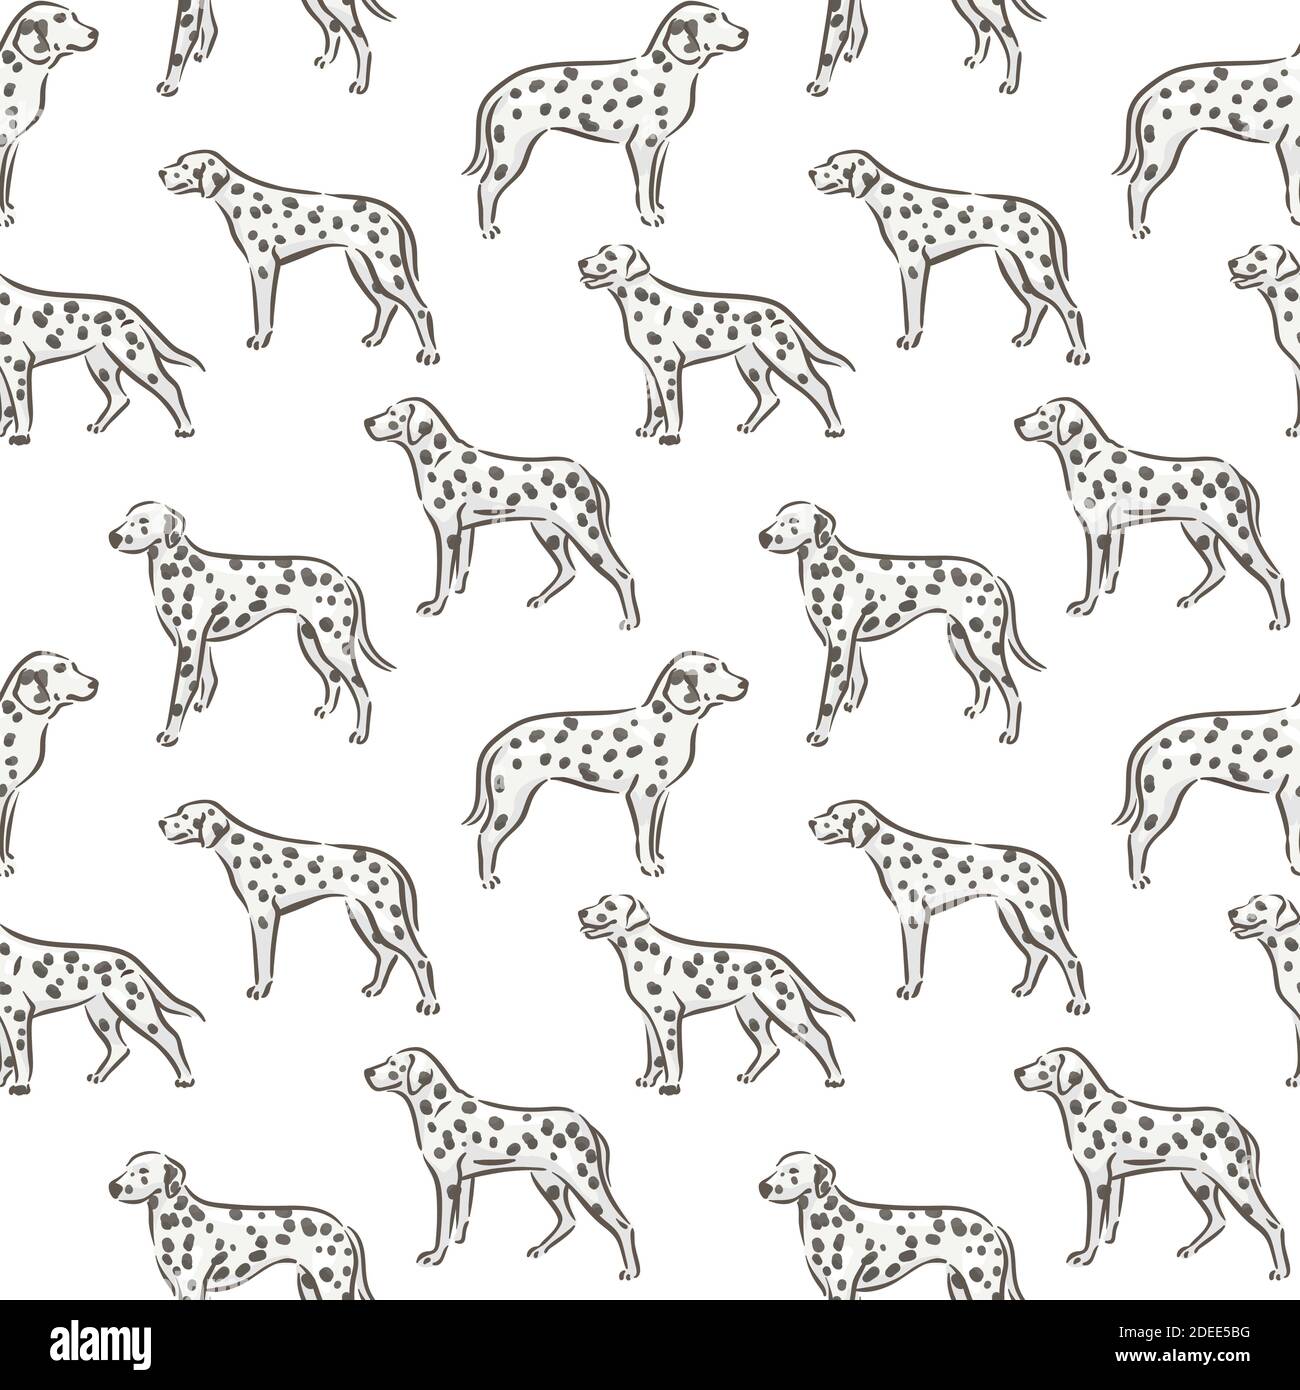 Niedlichen Hund dalmatinische Rasse Stammbaum nahtlose Muster Vektor Illustration Stock Vektor